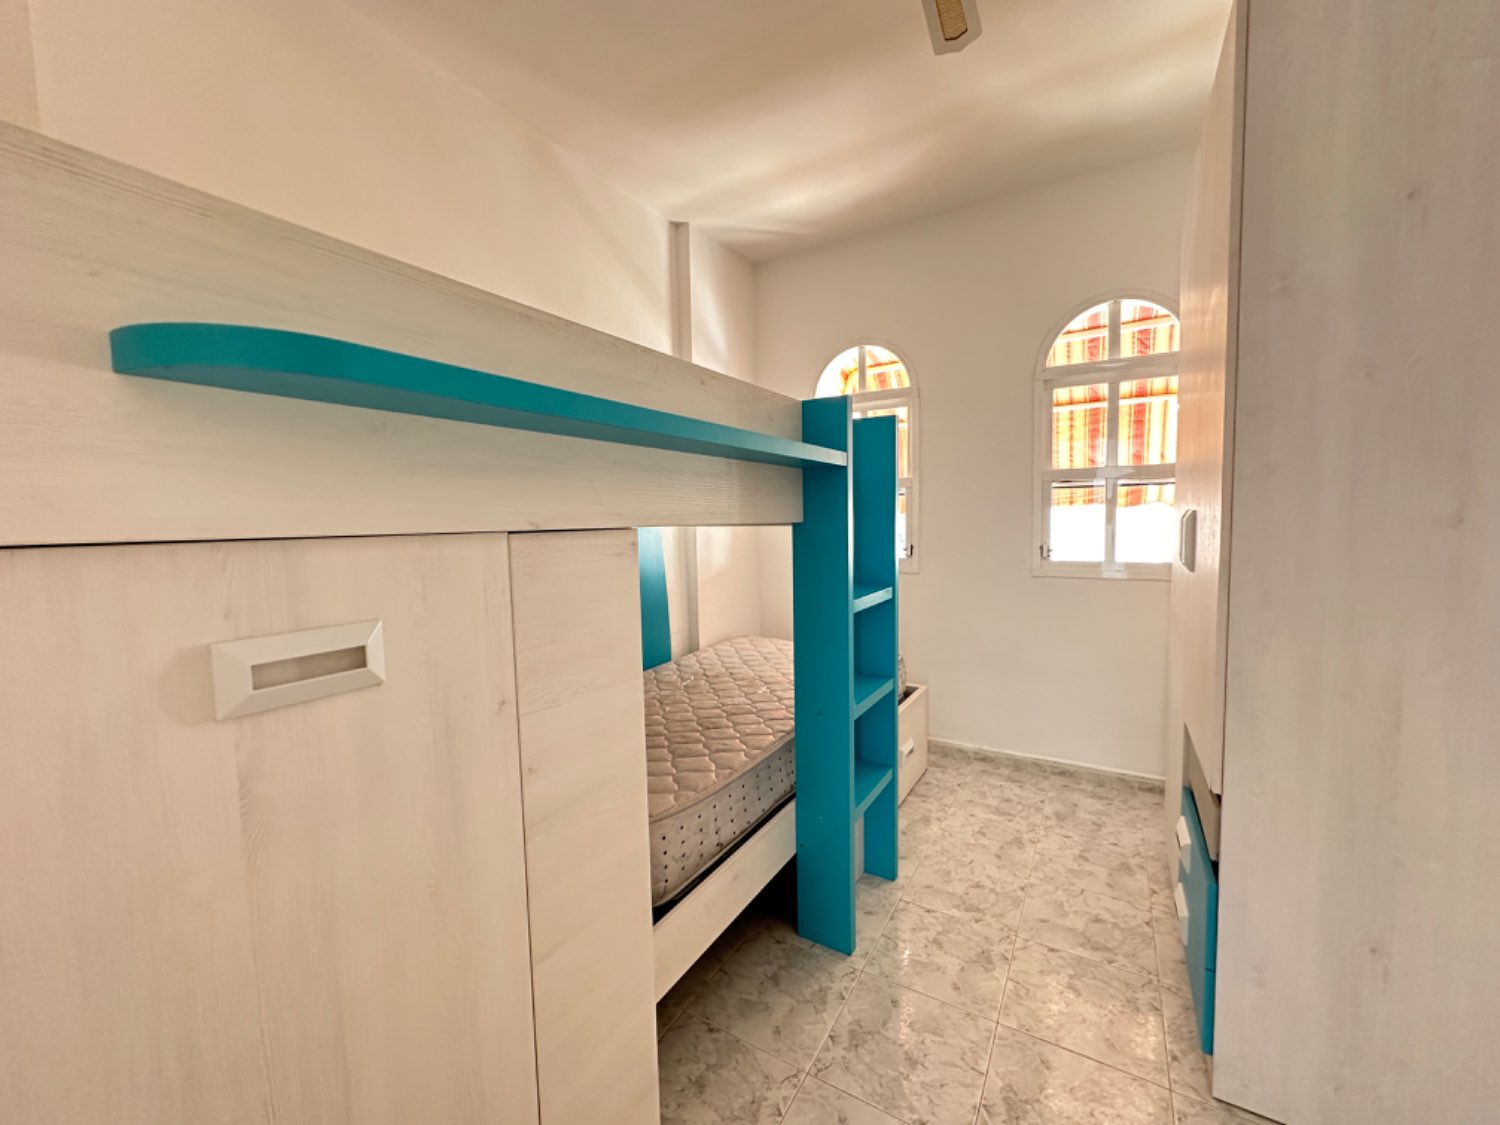 3 bedroom, 1 bathroom apartment in Playa Flamenca!